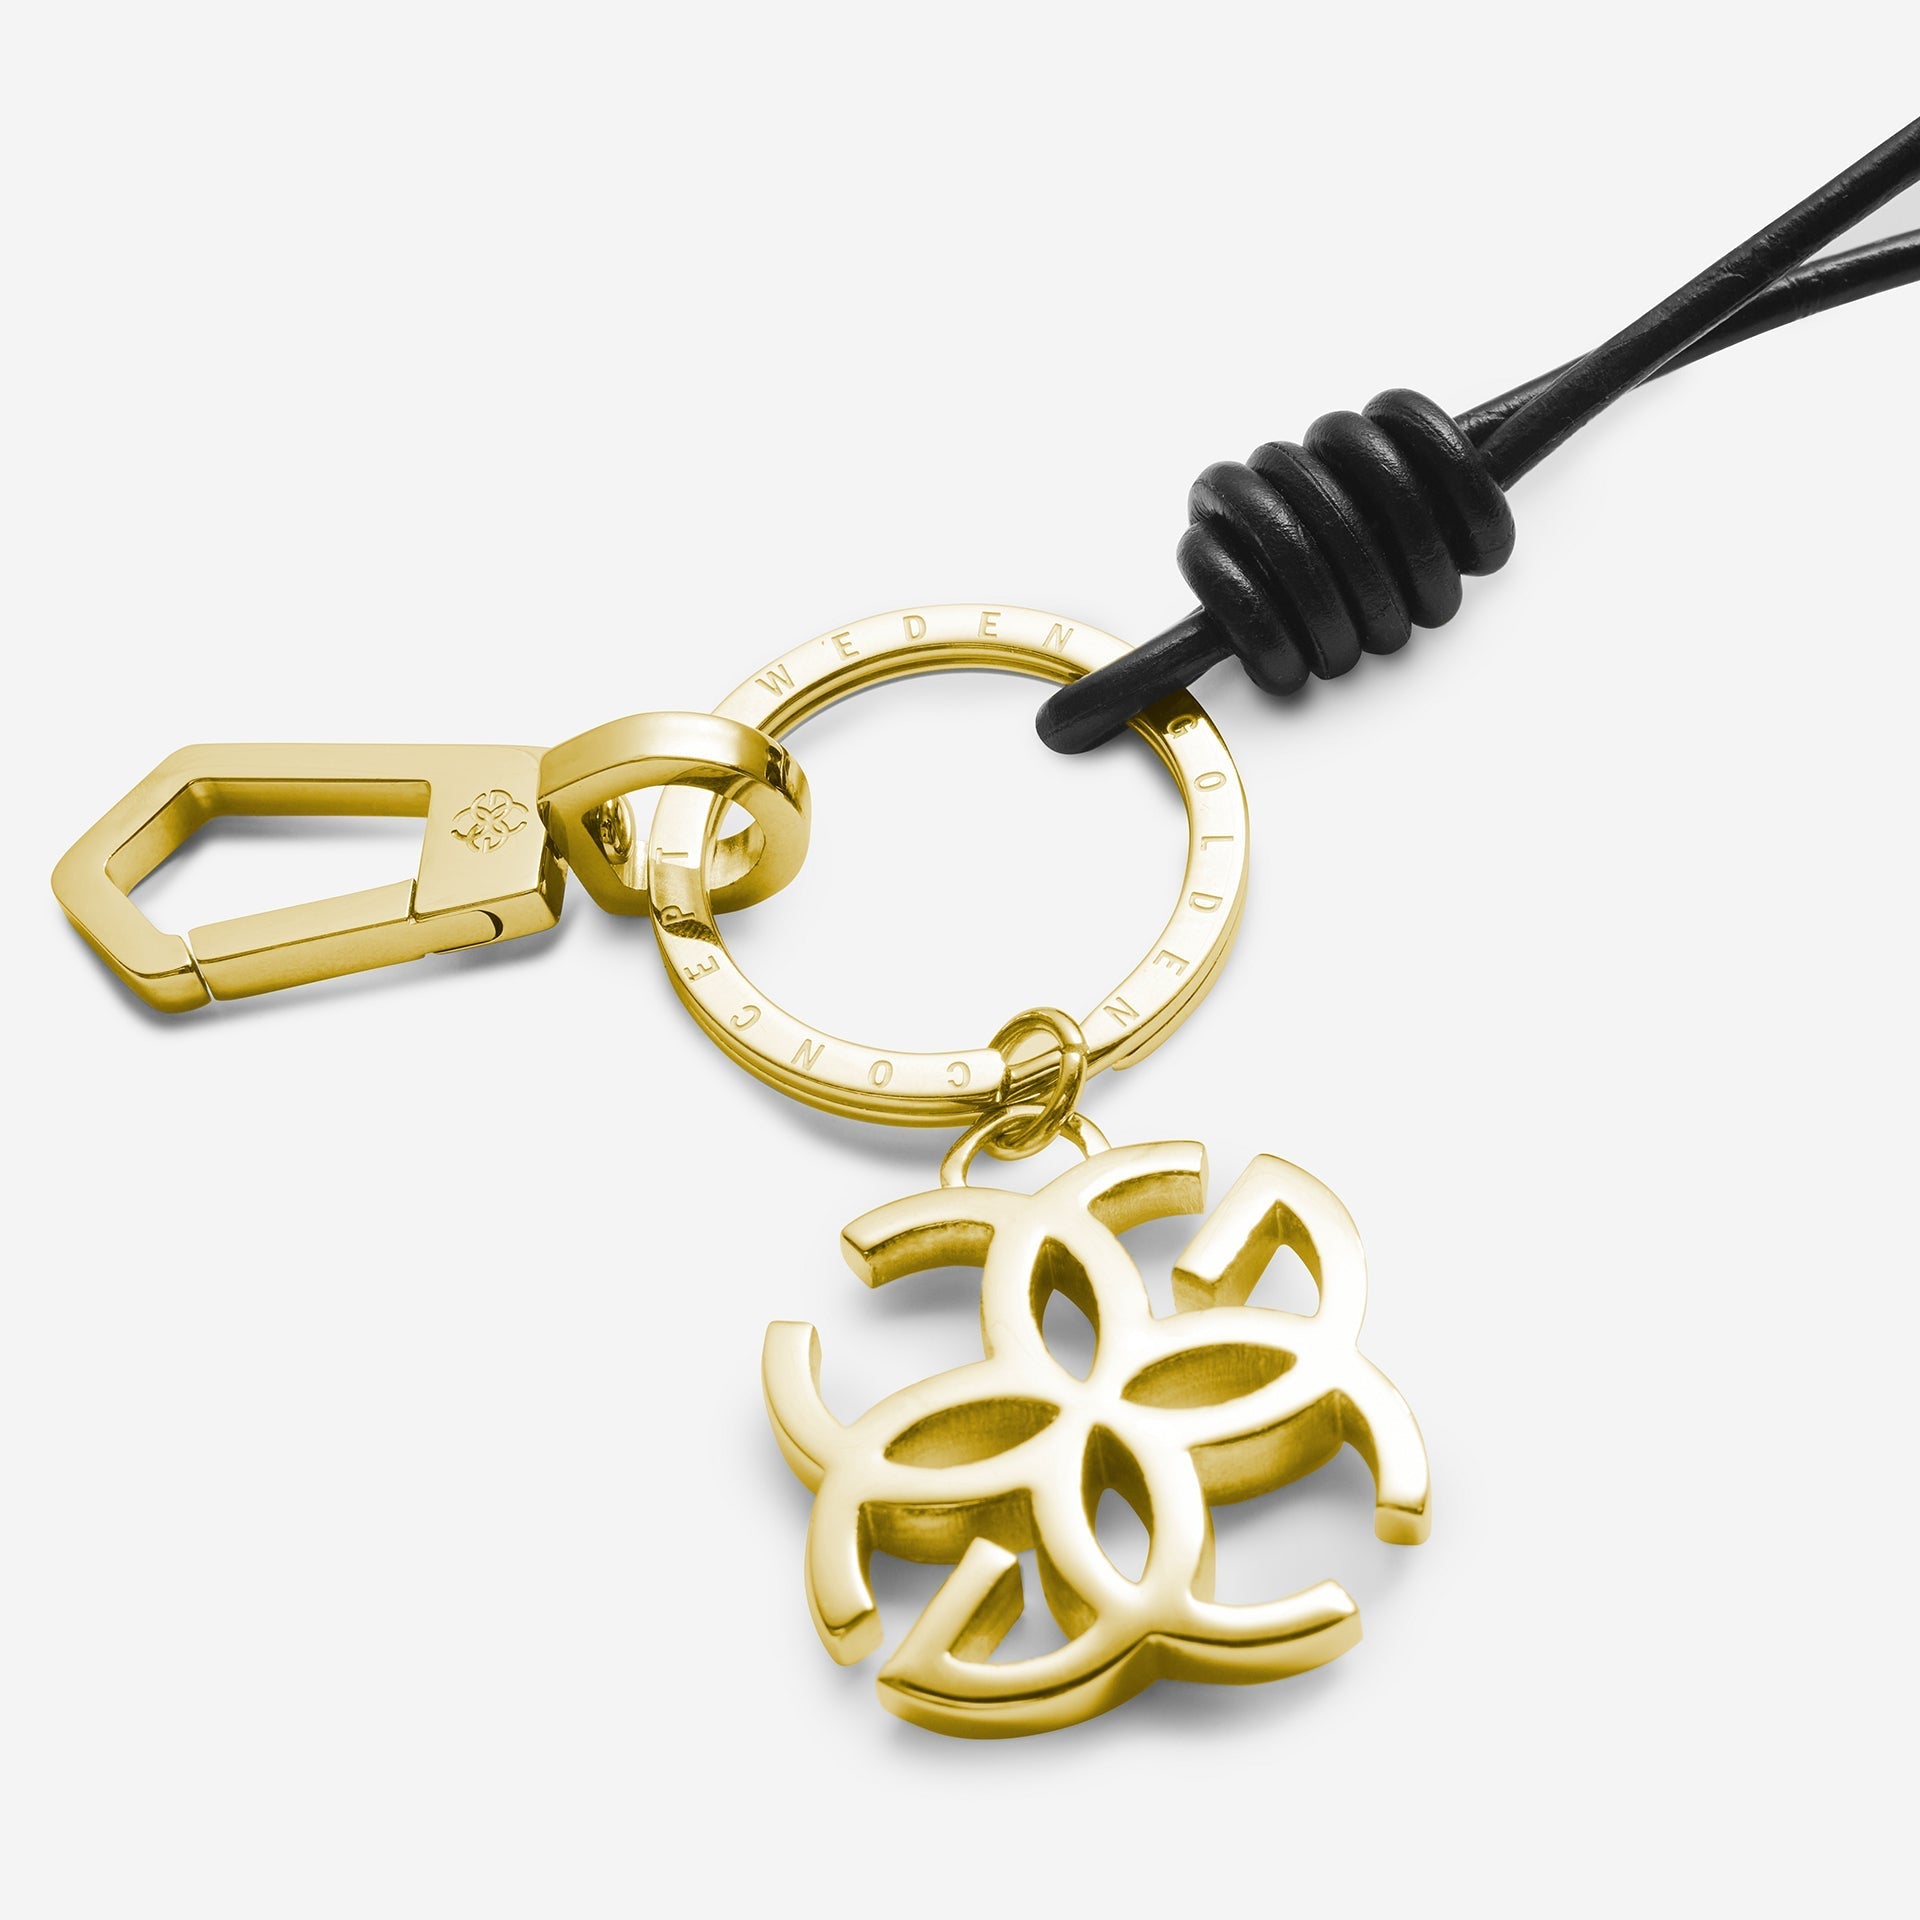 Golden Concept - 皮革配件 - 钥匙扣 - 金